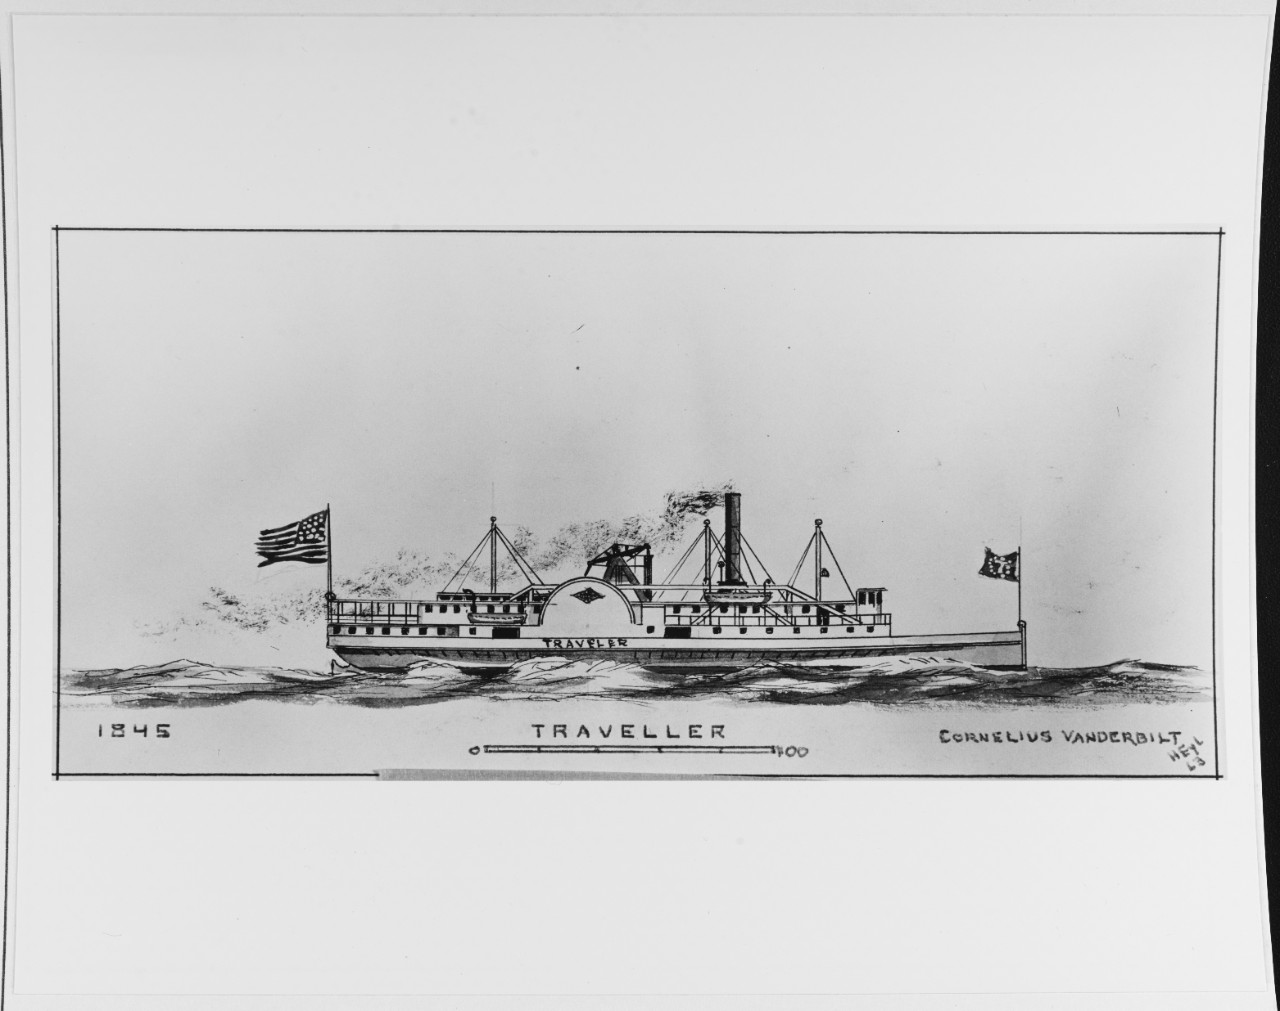 TRAVELLER (American Merchant Steamer, 1845-1873)